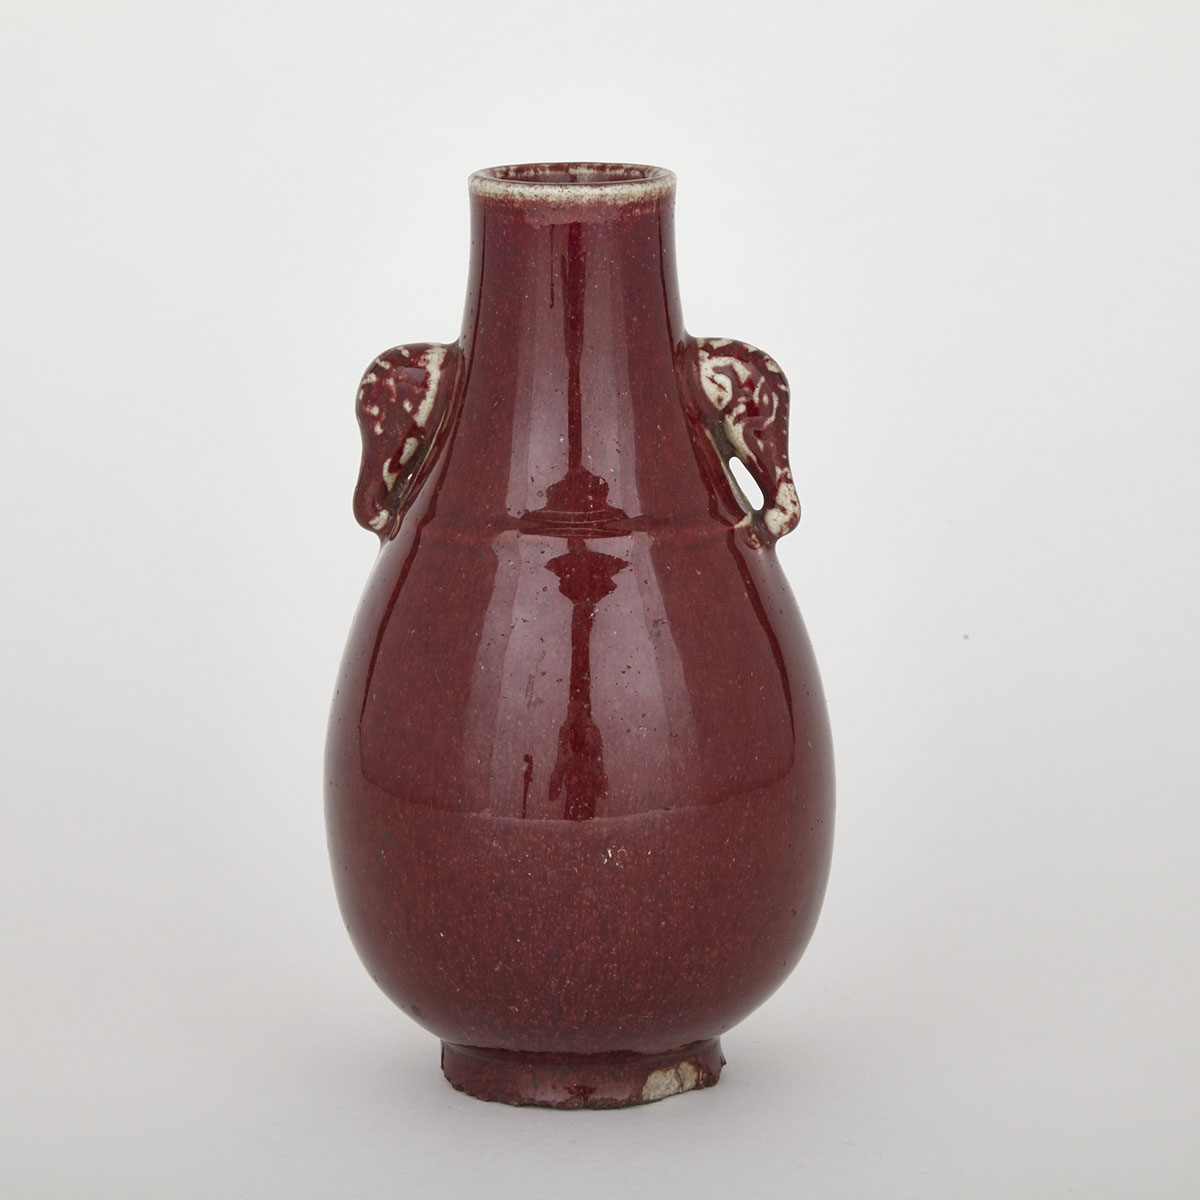 Flambe Vase with elephant handles